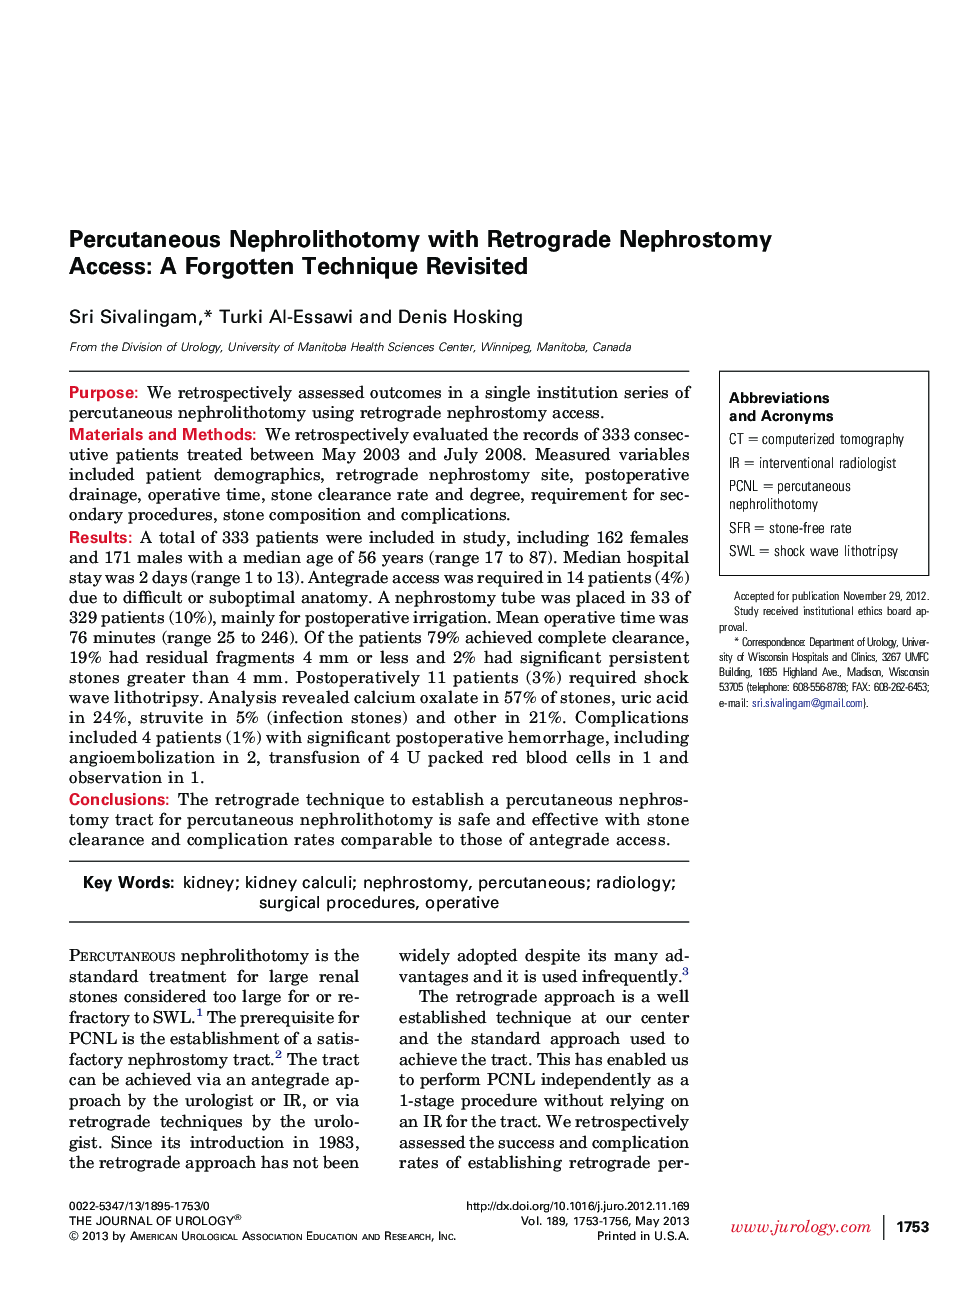 Percutaneous Nephrolithotomy with Retrograde Nephrostomy Access: A Forgotten Technique Revisited 